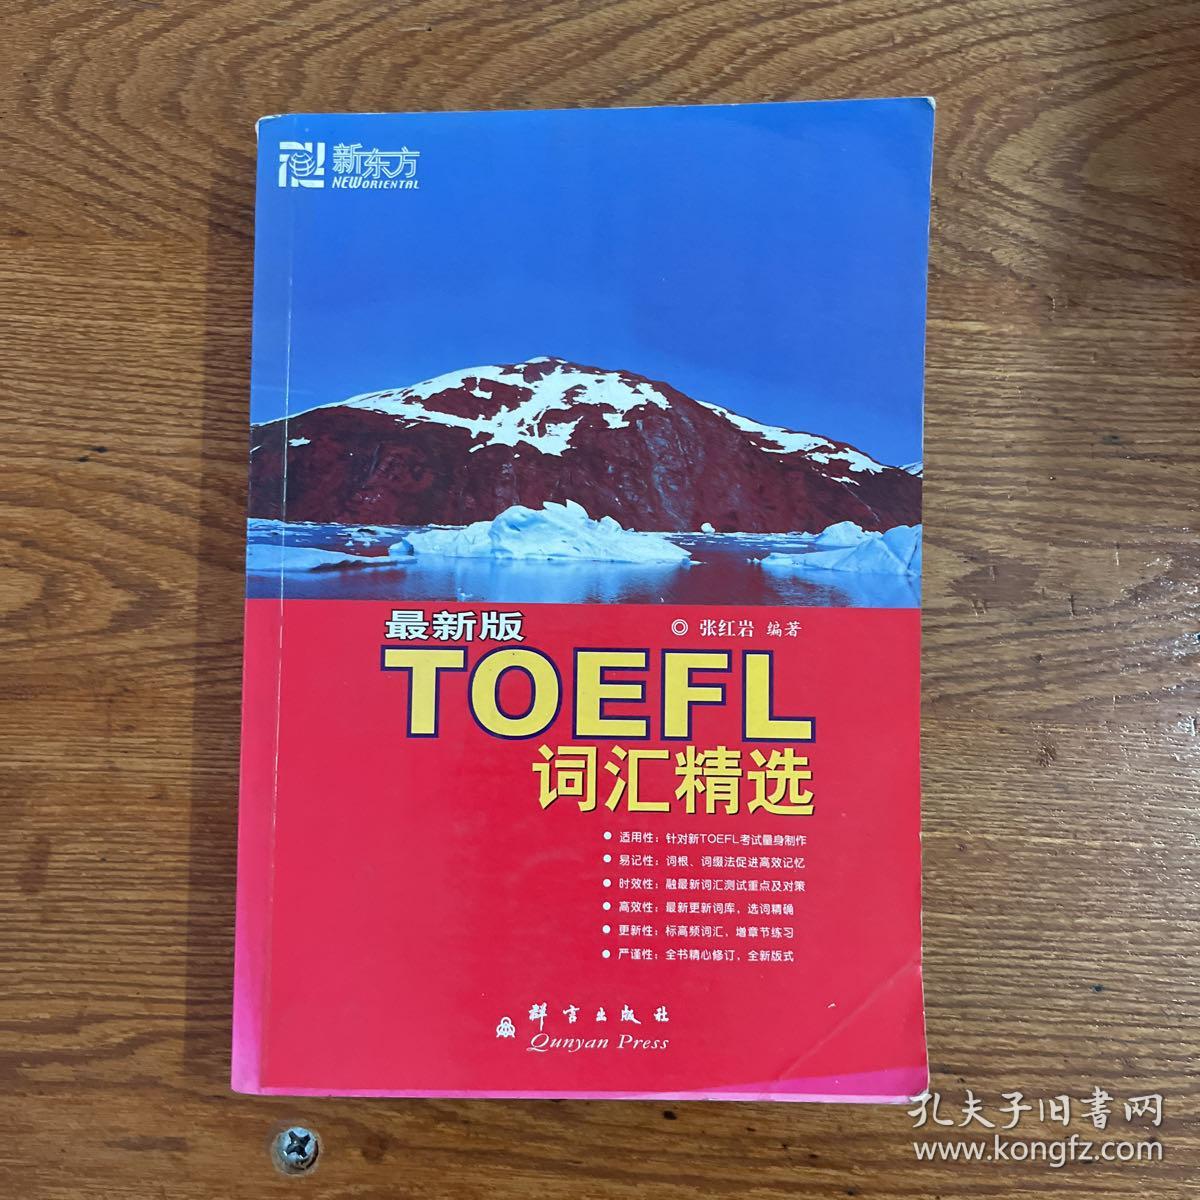 【CLACS】·群言出版社·《最新版TOEFL词汇精选》·32开